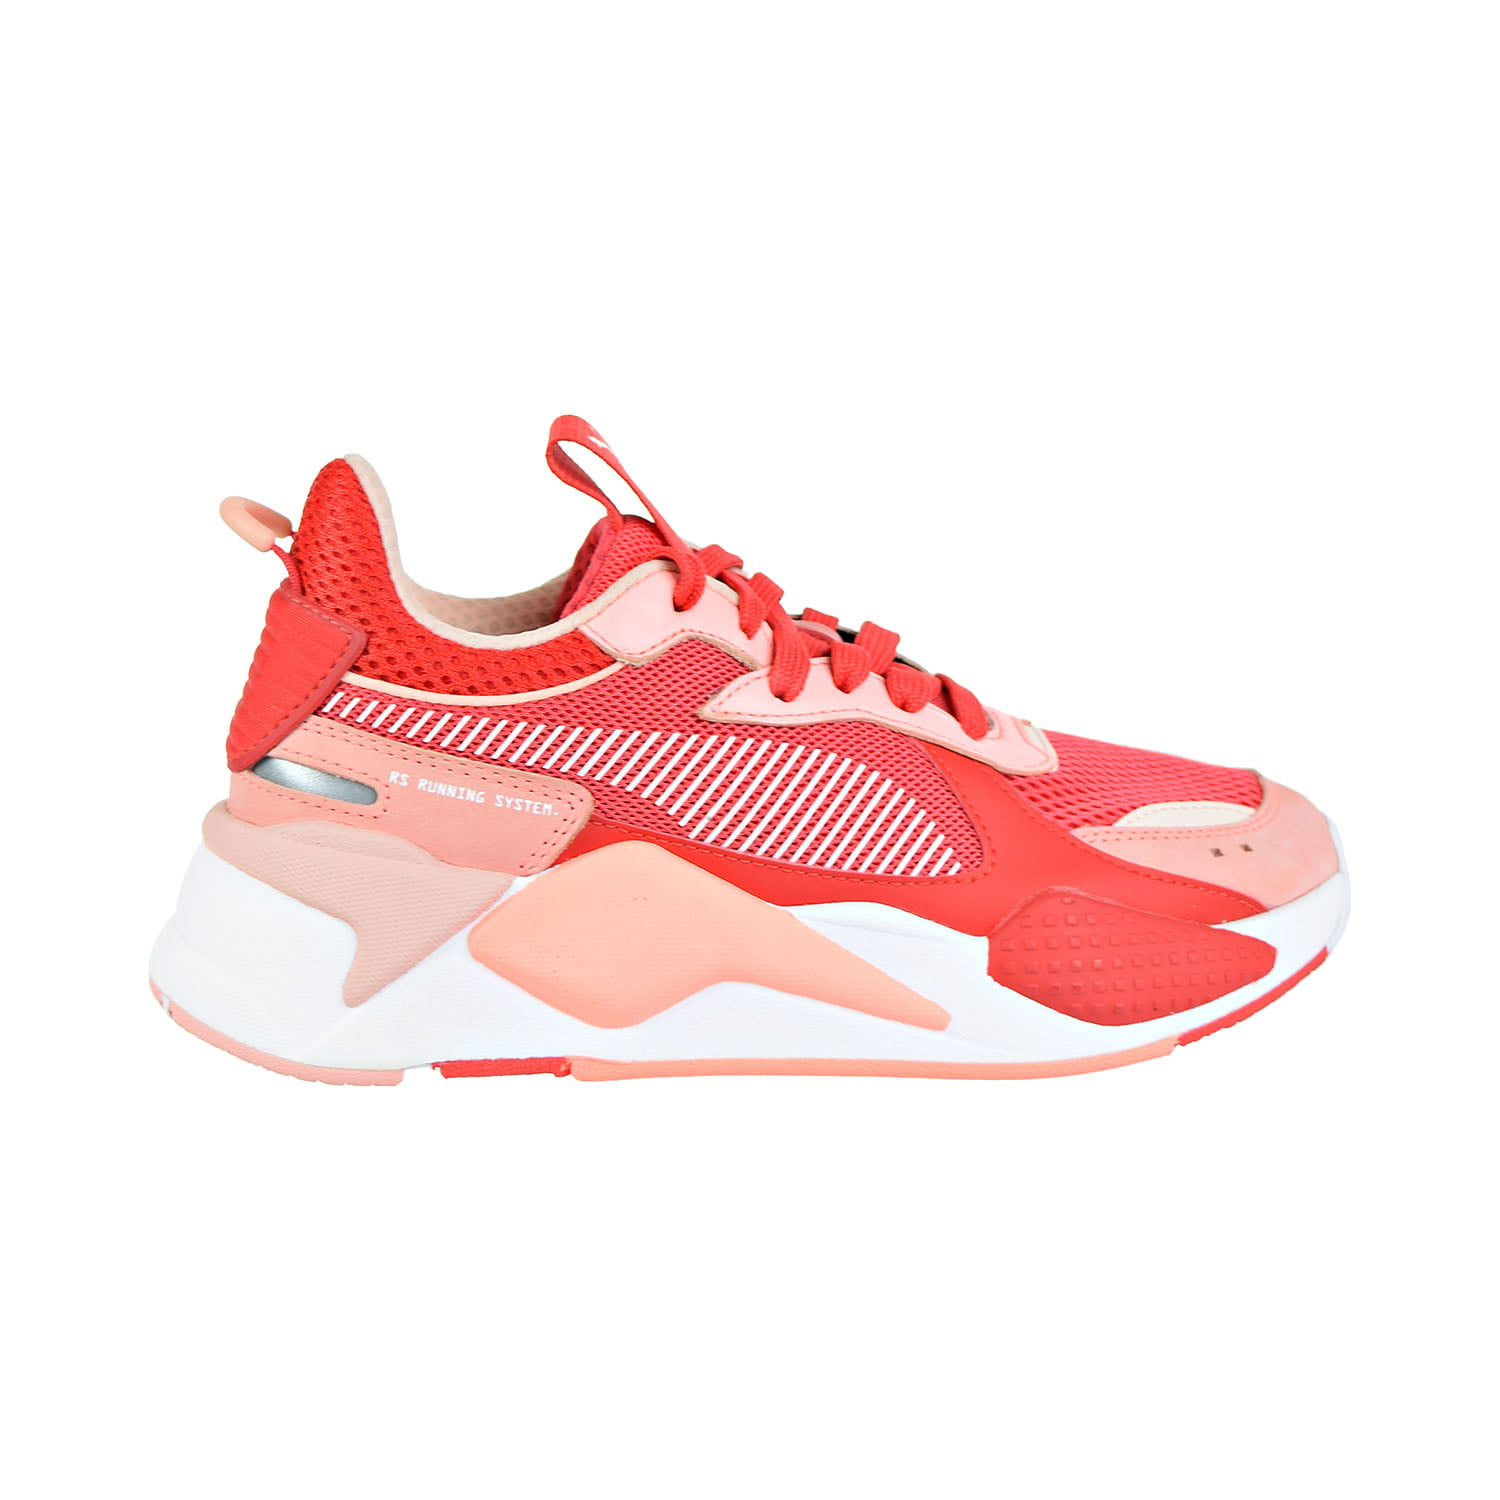 Puma RS-X Toys Women's Sneakers Bright Peach/High Risk 370750-07 Walmart.com